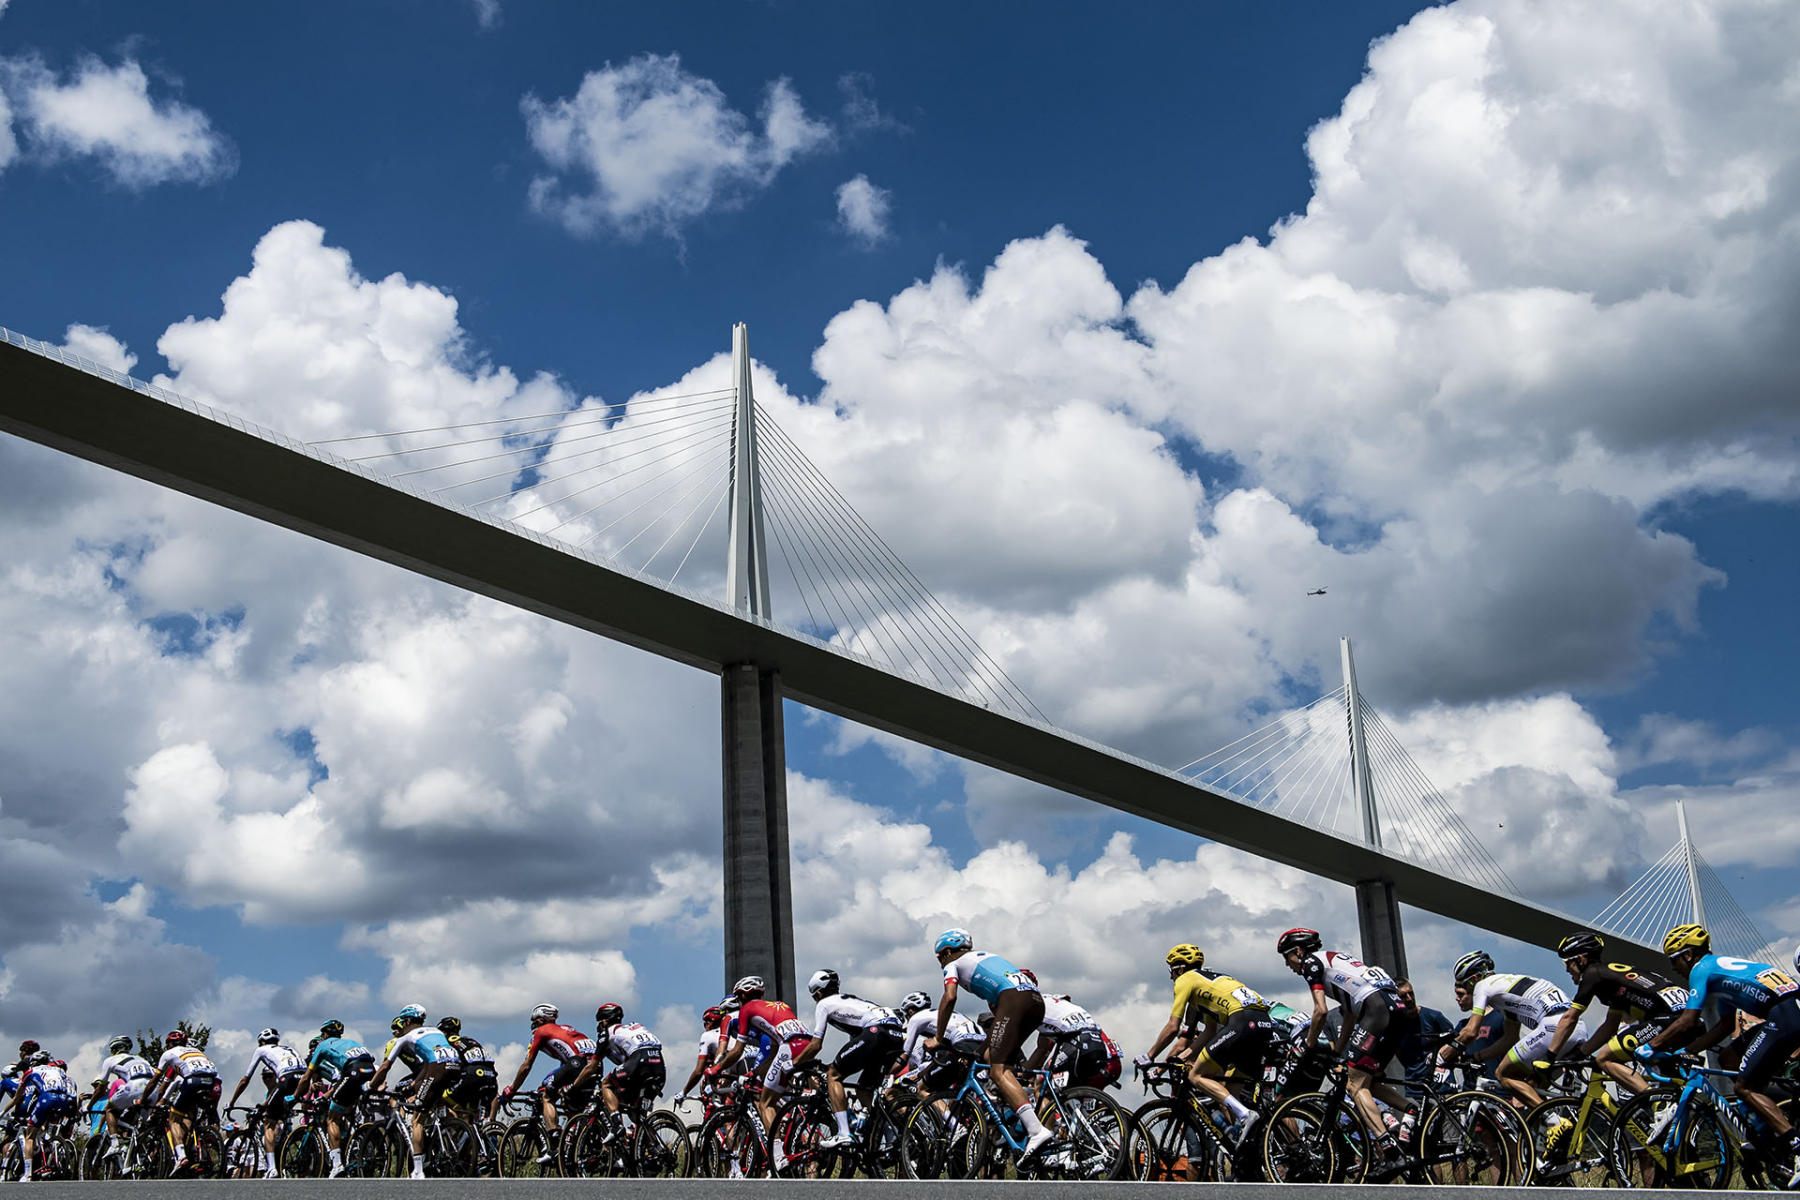 Tour de France - Stage Fifteen - The peloton rides under the Millau Viaduct